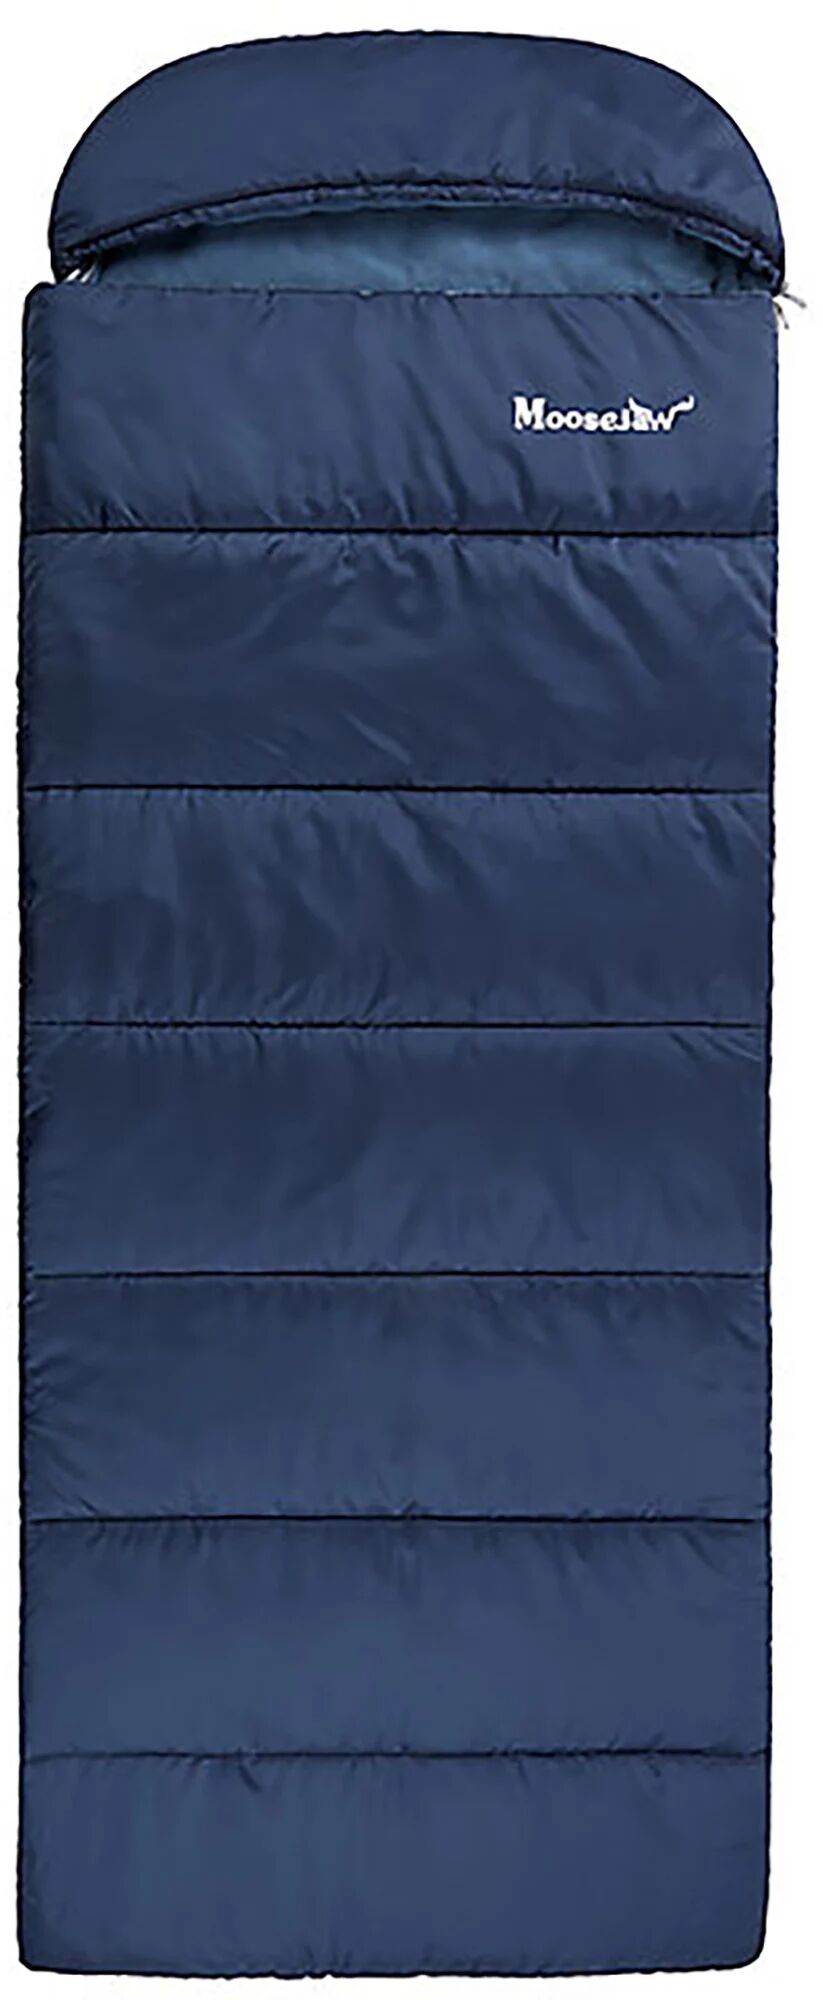 Moosejaw Snoozilla XL Sleeping Bag, Men's, Blue